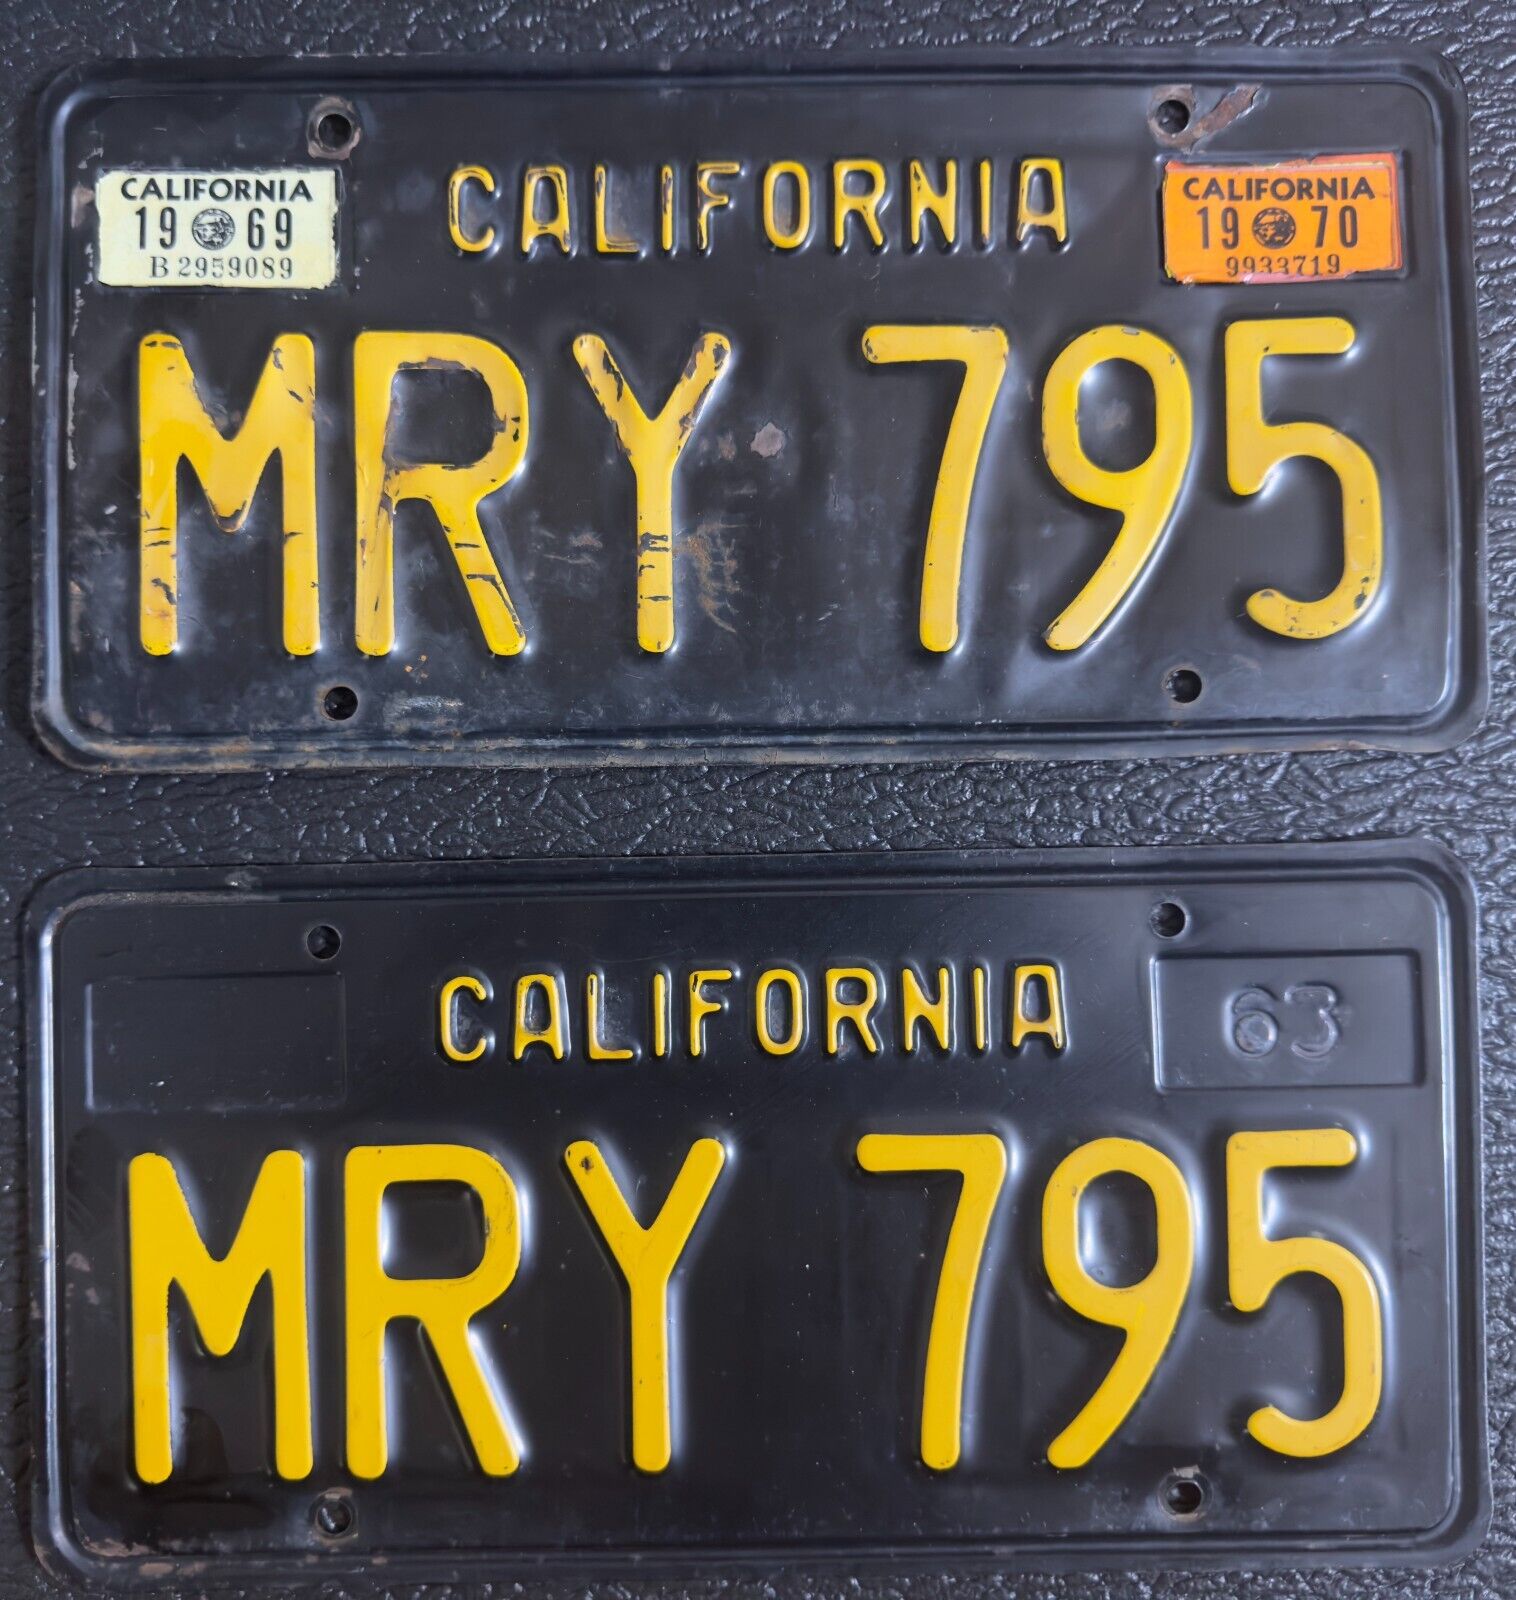 1963 Vintage California Black & Yellow License Plates - Pair MRY 795